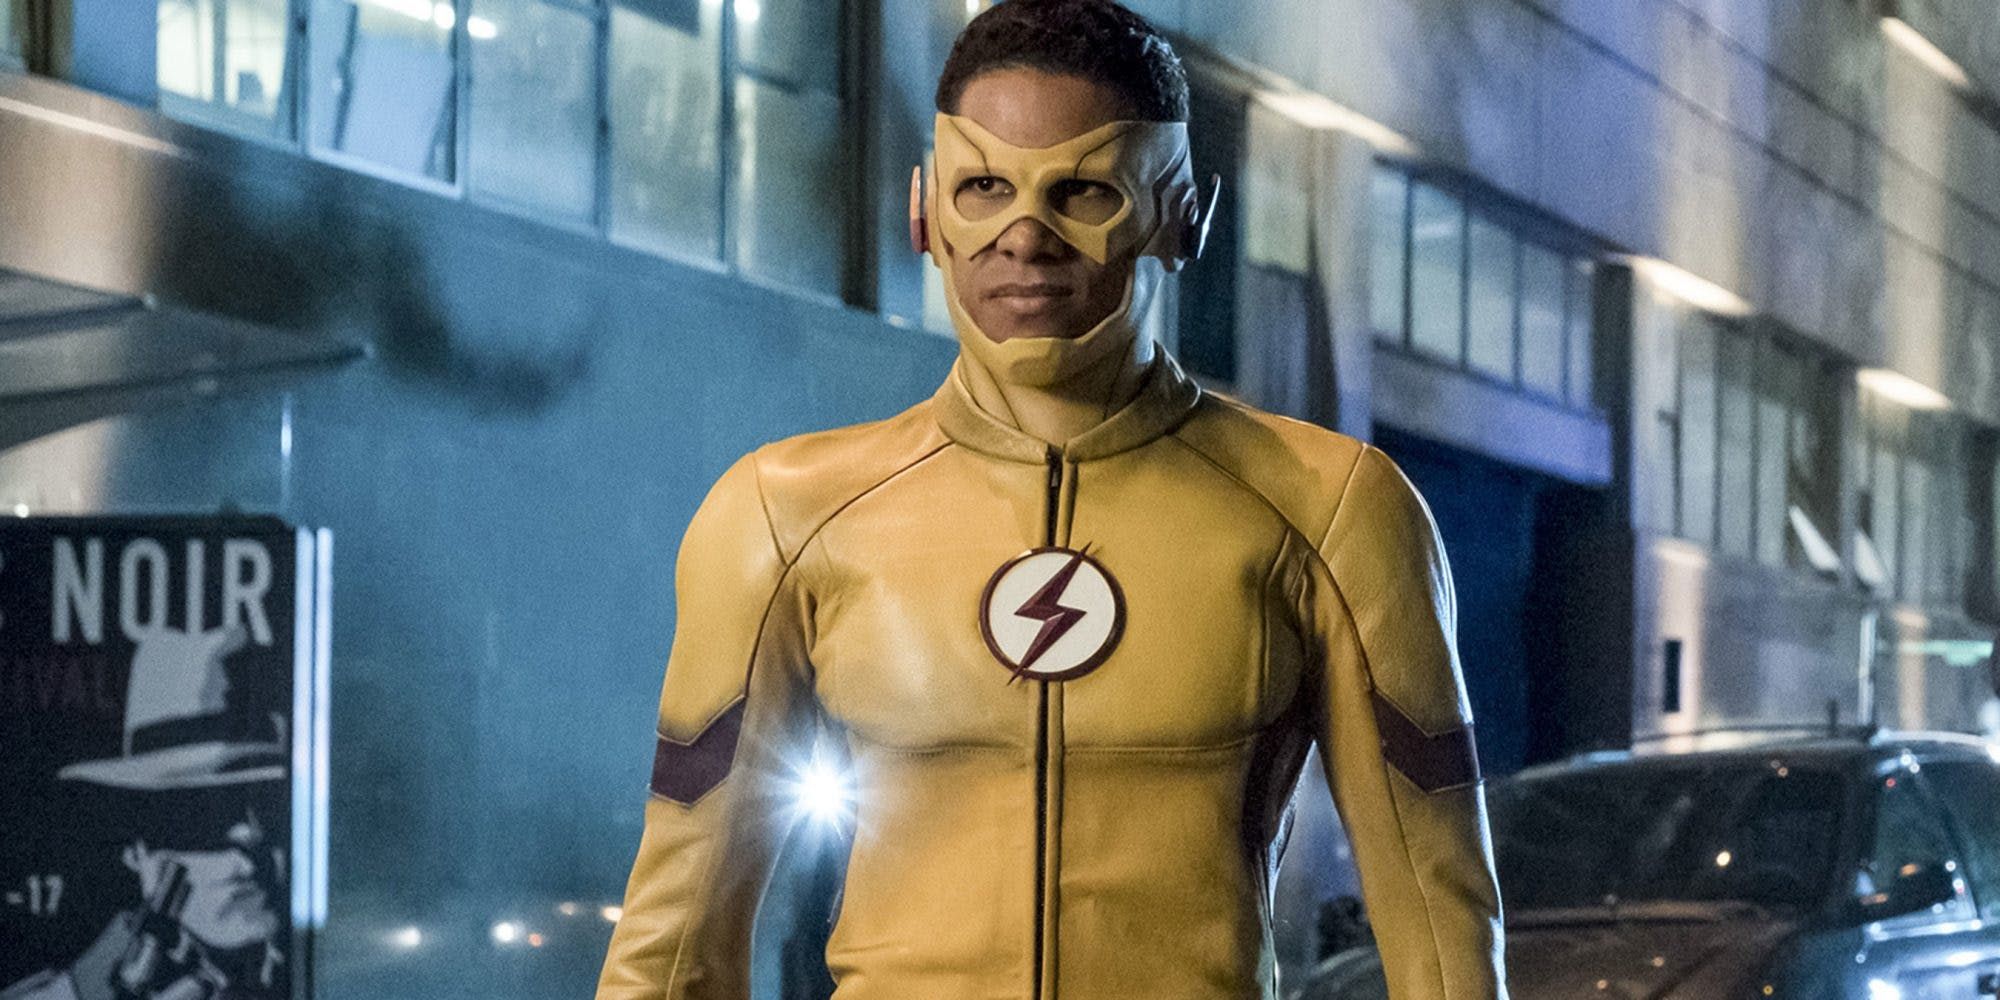 Kid Flash returns in his costume